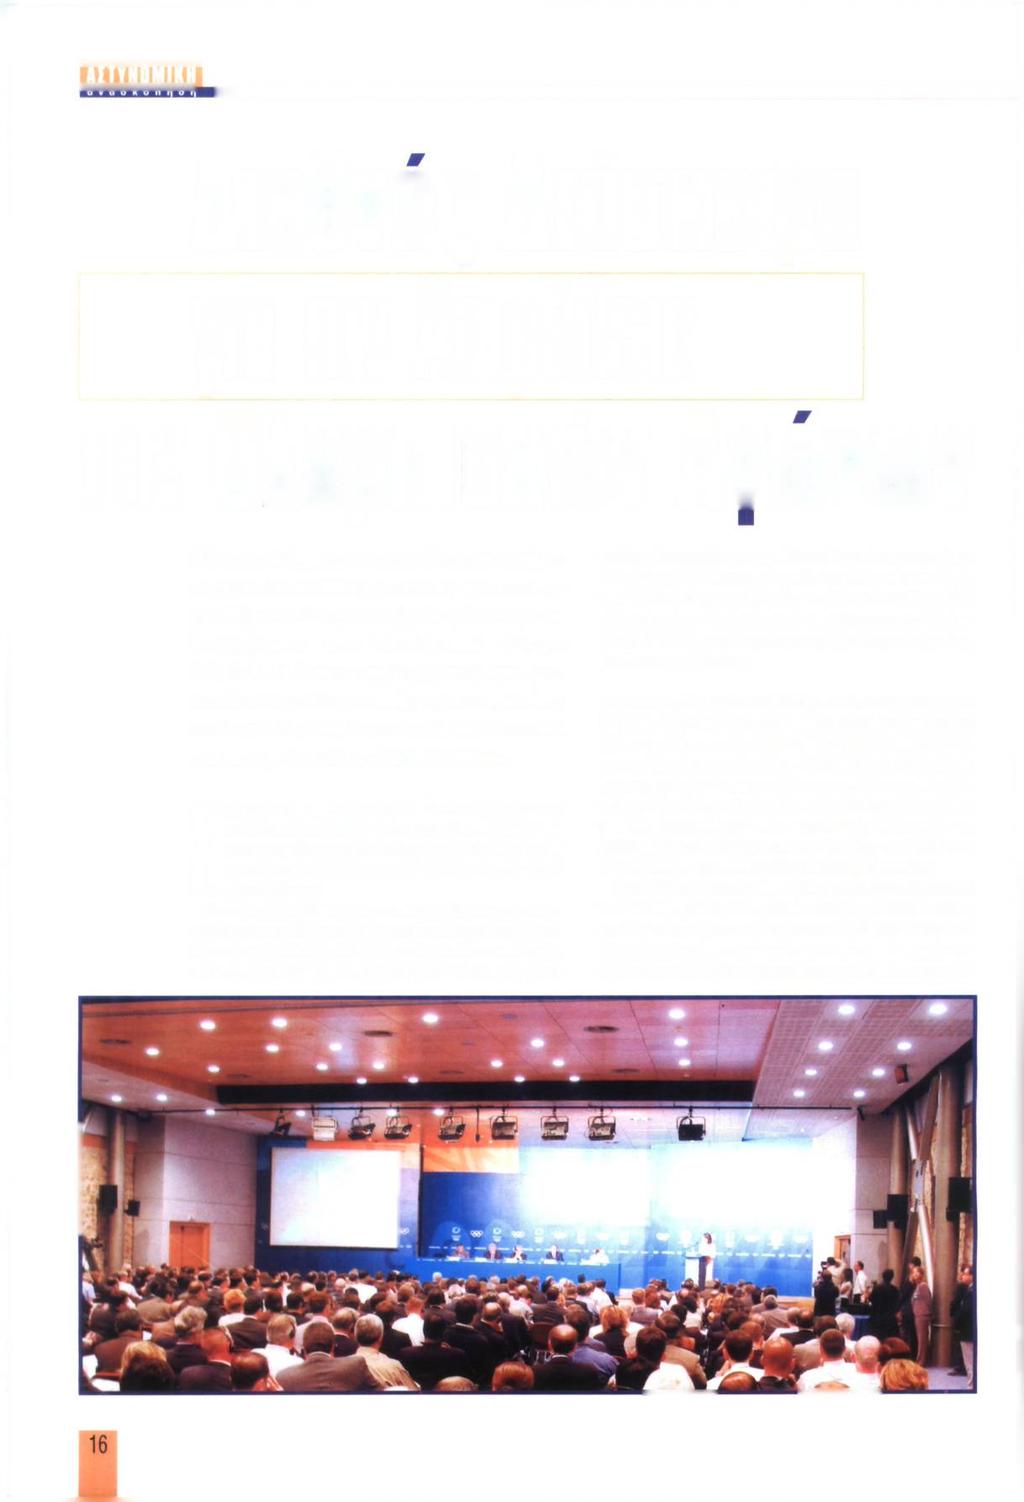 AieI vic Αιάνκεφη p ιην ΑοφάΠεια πανολυμιιακών Avnvhv Ολοκληρώθηκαν οι εργασίες της τριήμερης (24-26.5.2004) Διεθνούς Διάσκεψης για θέματα Ολυμπιακής Ασφάλειας που διεξήχθησαν στο Συνεδριακό Κέντρο Ο.